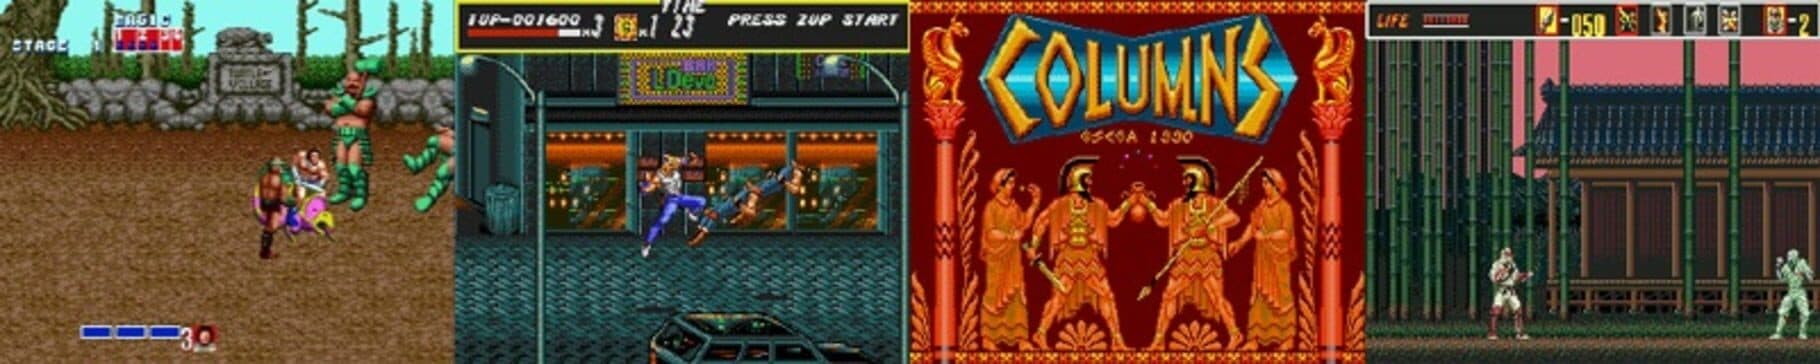 Sega Classics Arcade Collection: Limited Edition Image